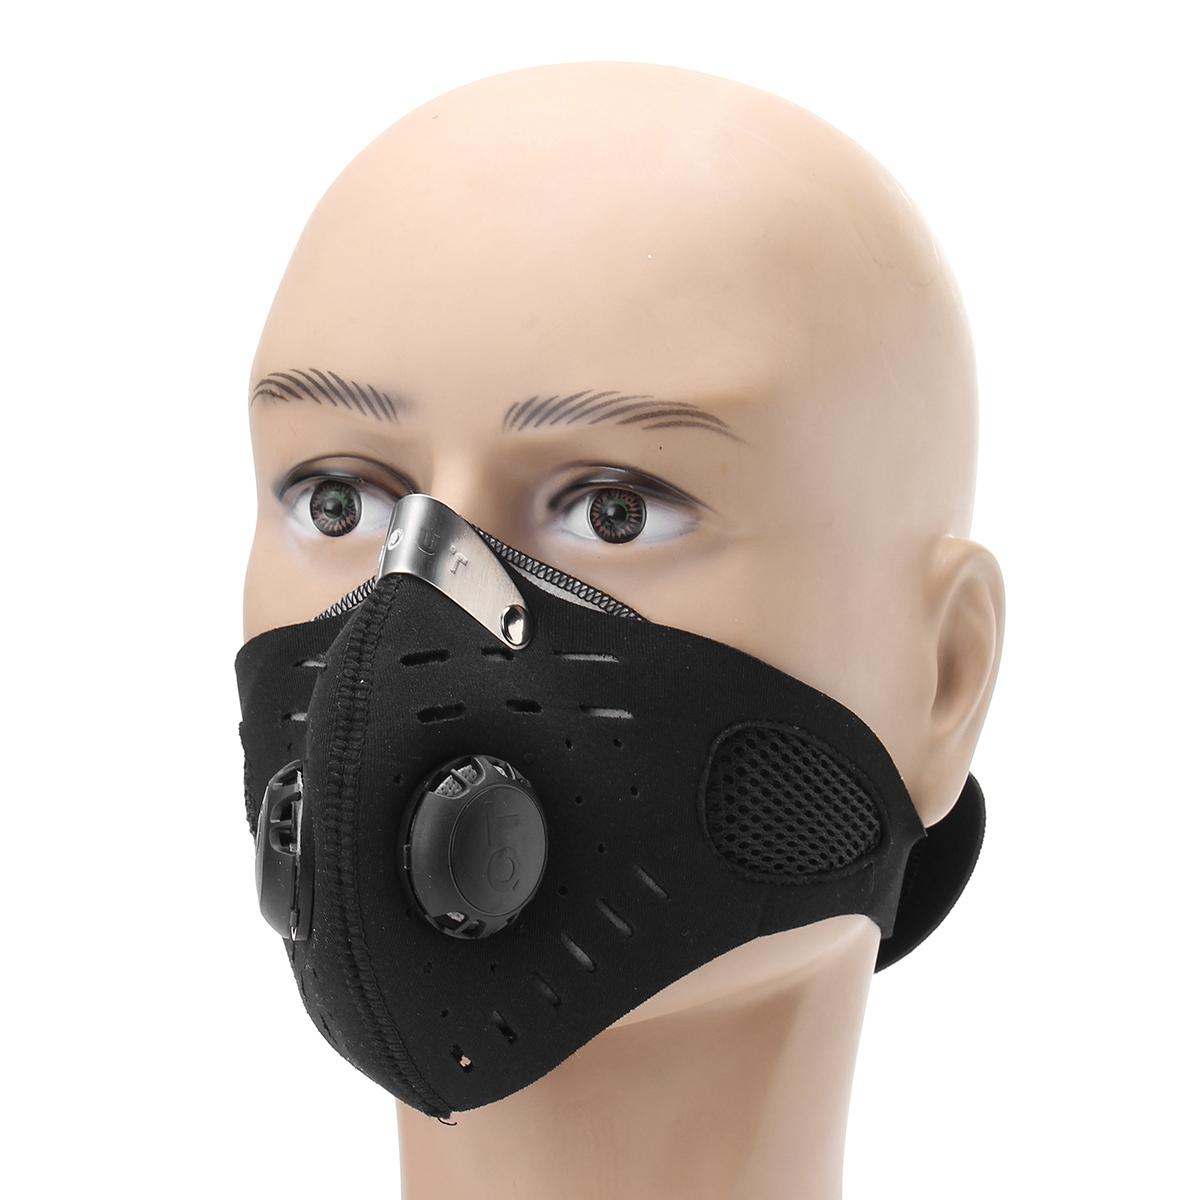 respiration mask